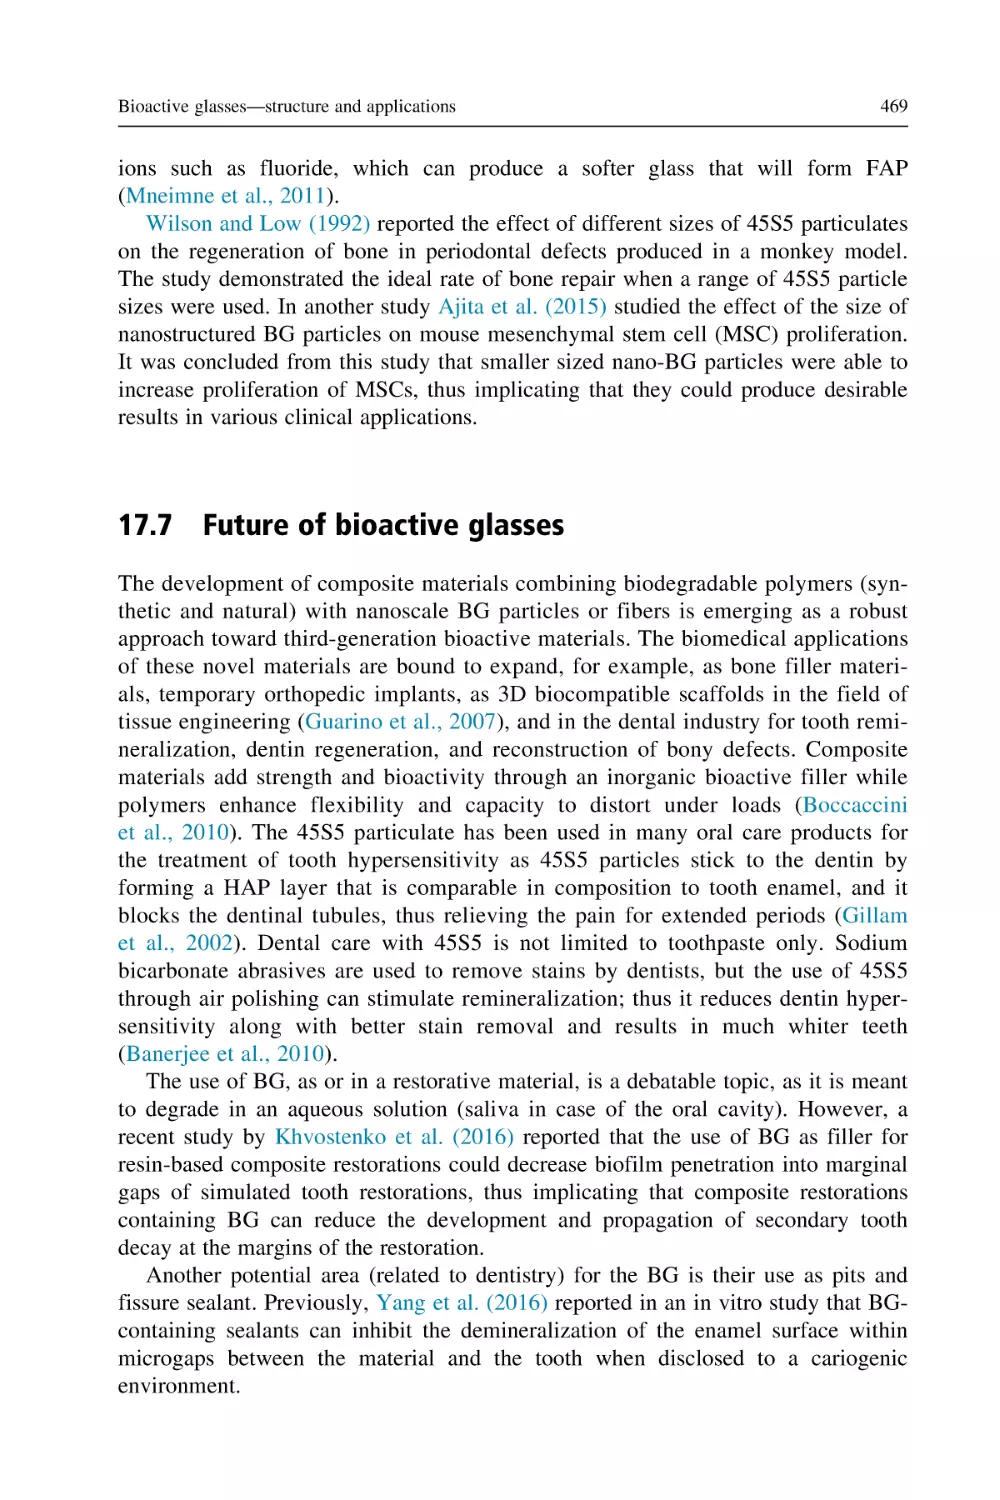 17.7 Future of bioactive glasses